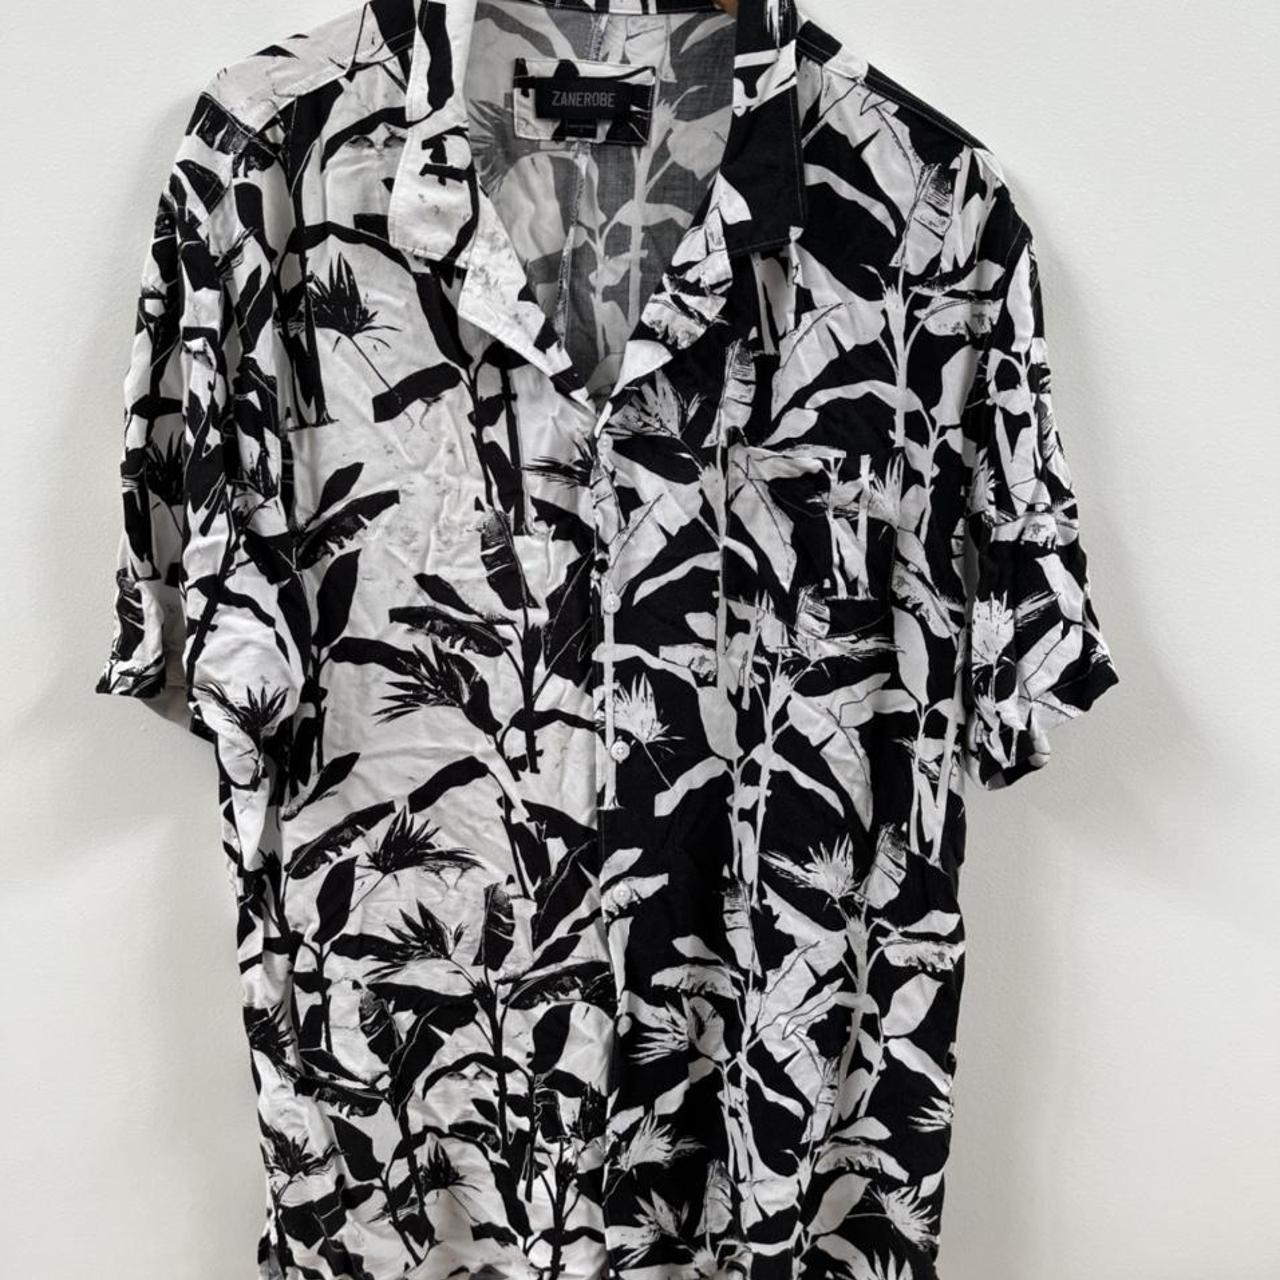 Zane Robe Hawaiian / resort / party shirt Size L - Depop